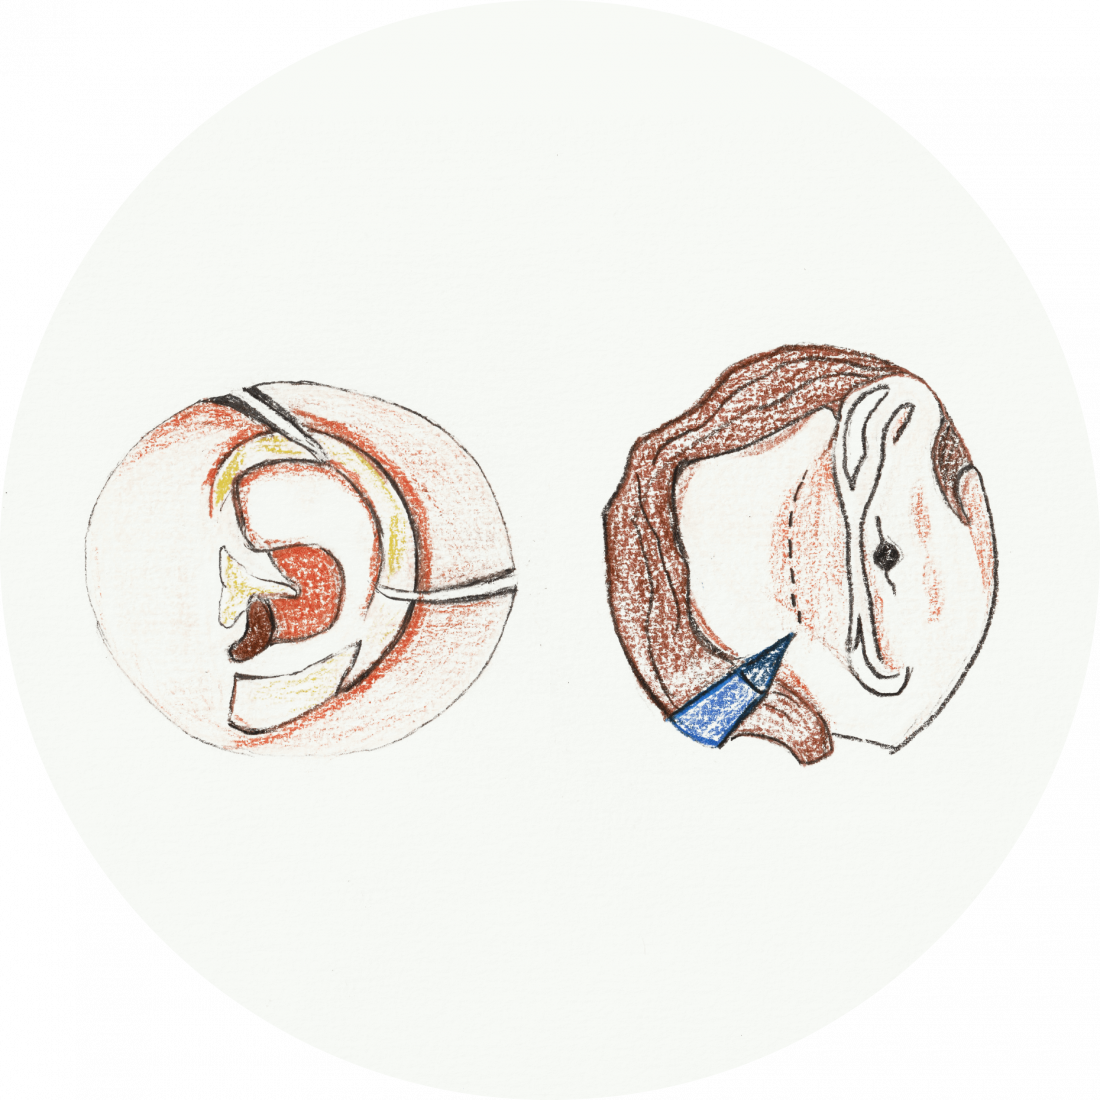 Procedure details: Ear Reshaping